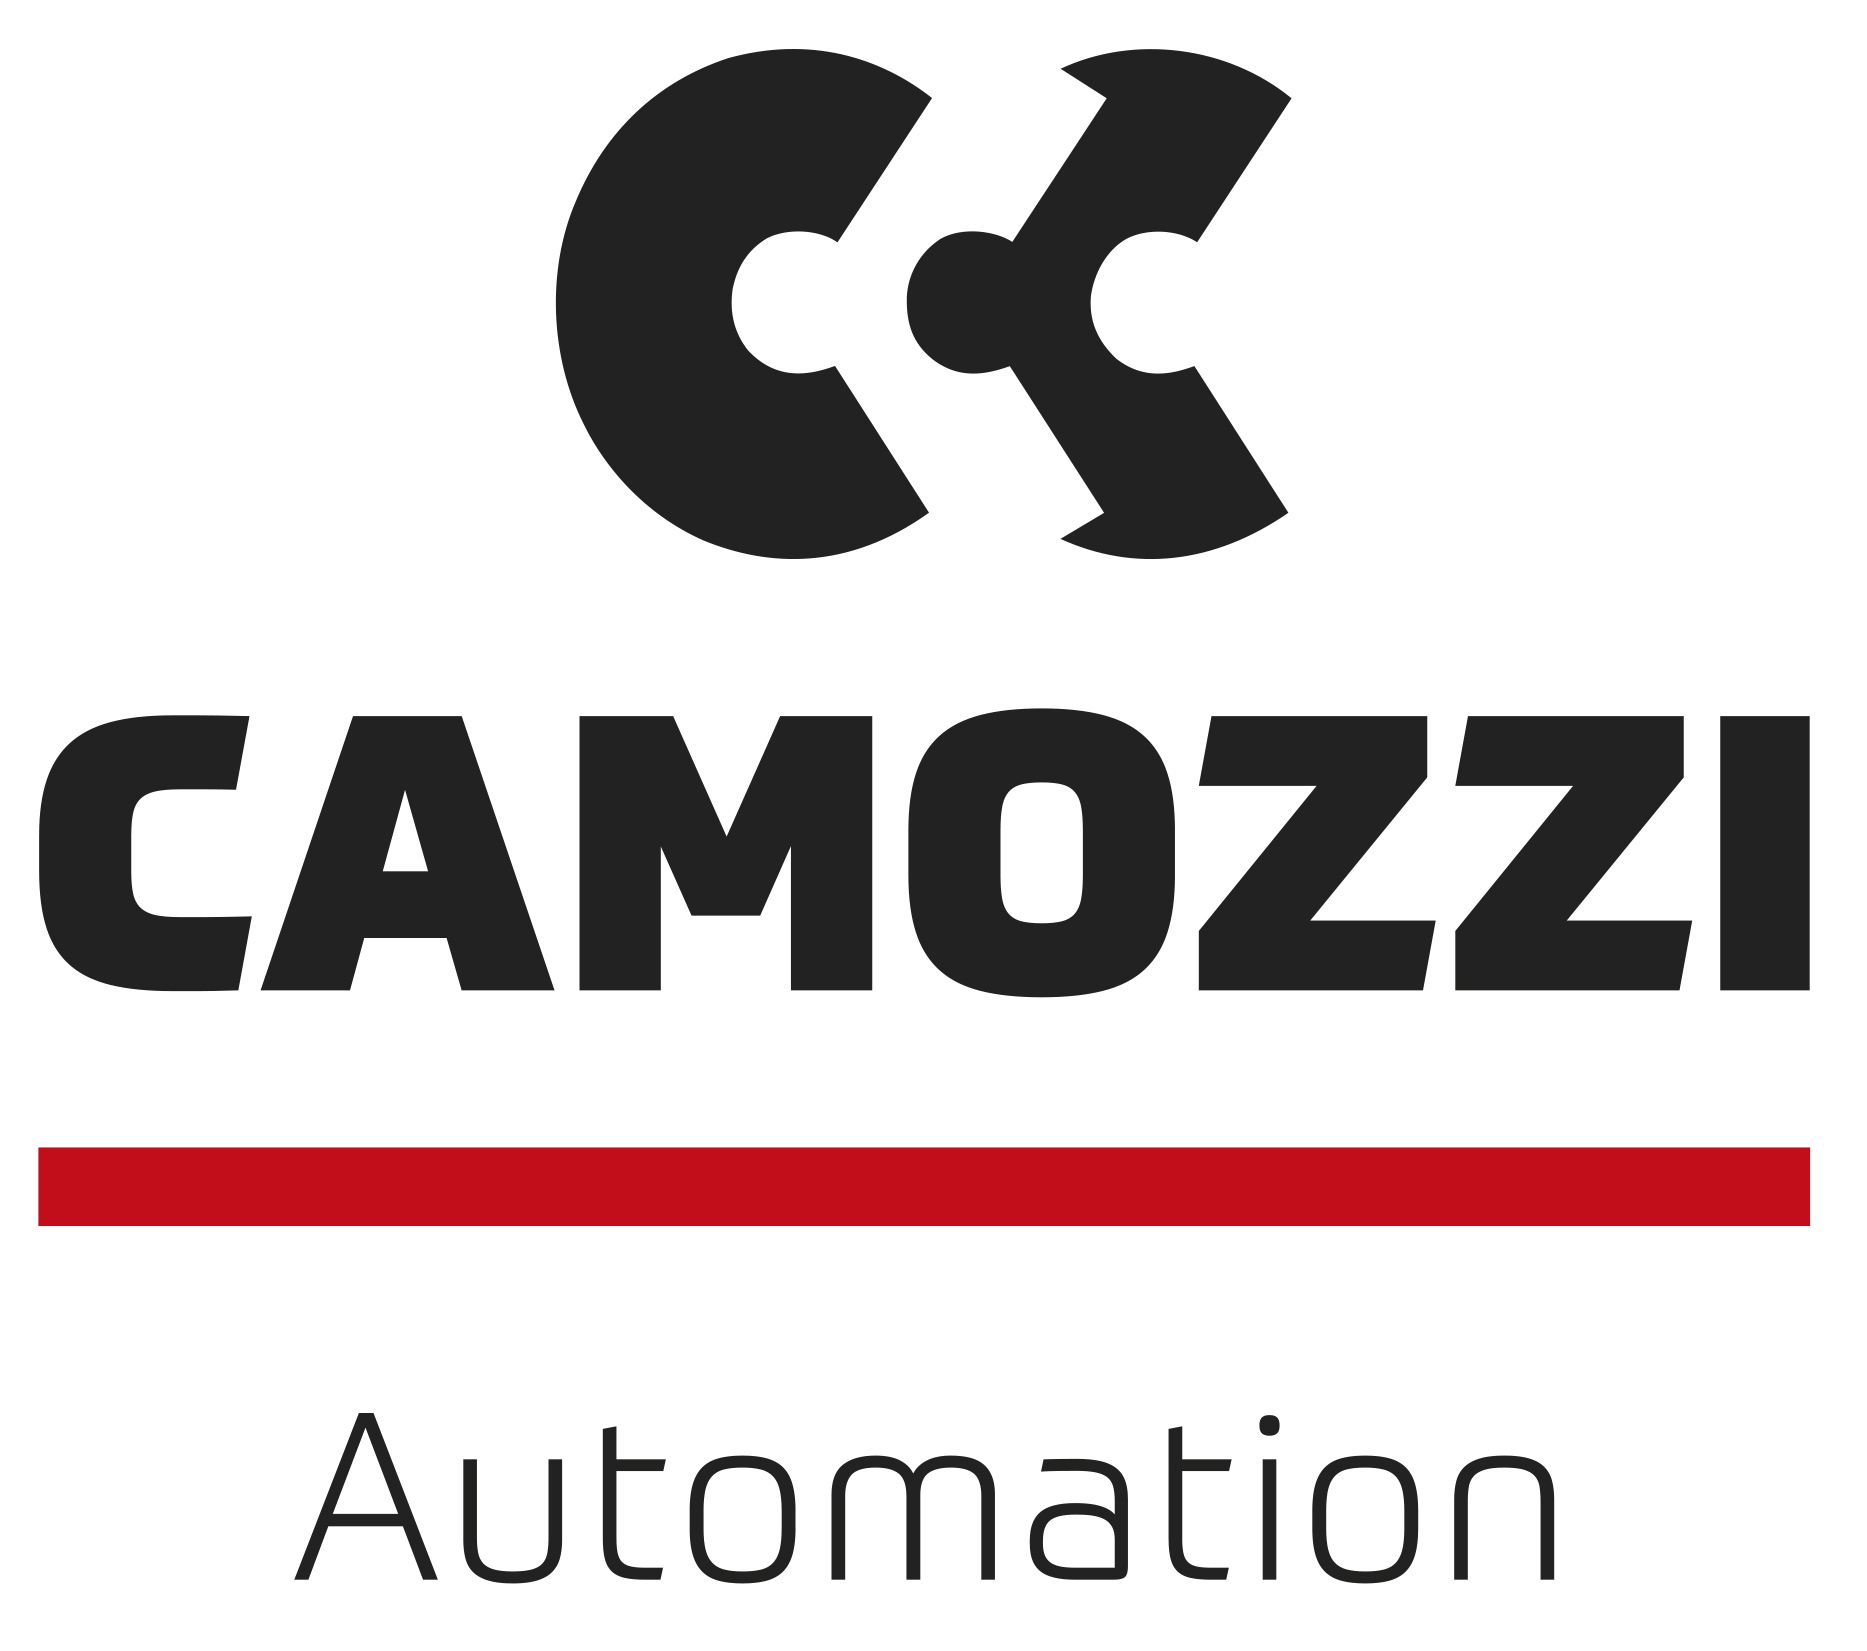 CAMOZZI Automation SpA